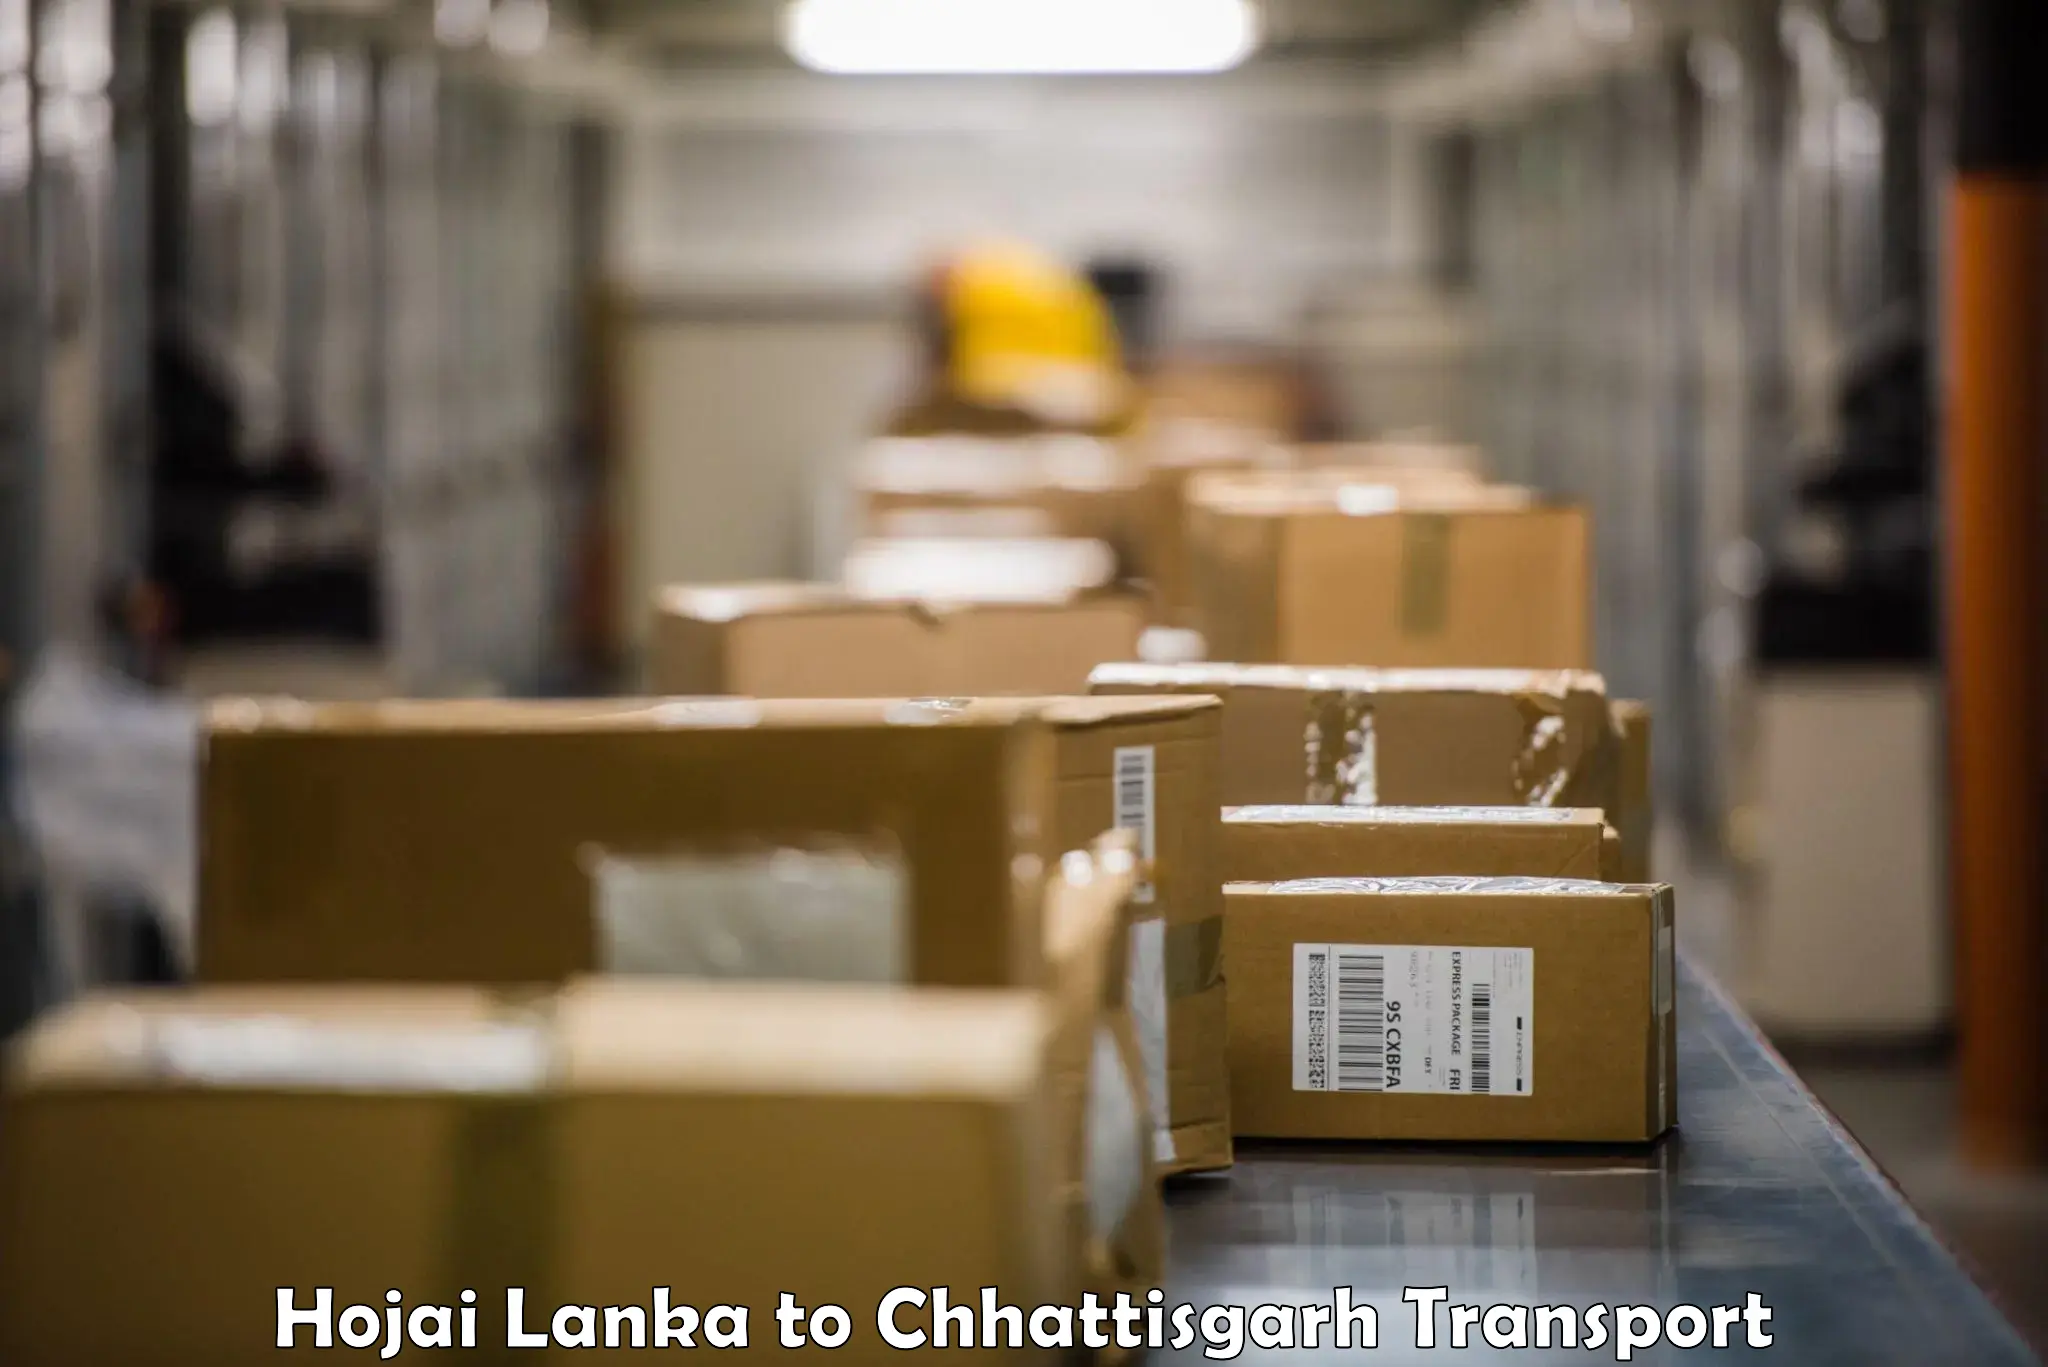 International cargo transportation services Hojai Lanka to Chhattisgarh